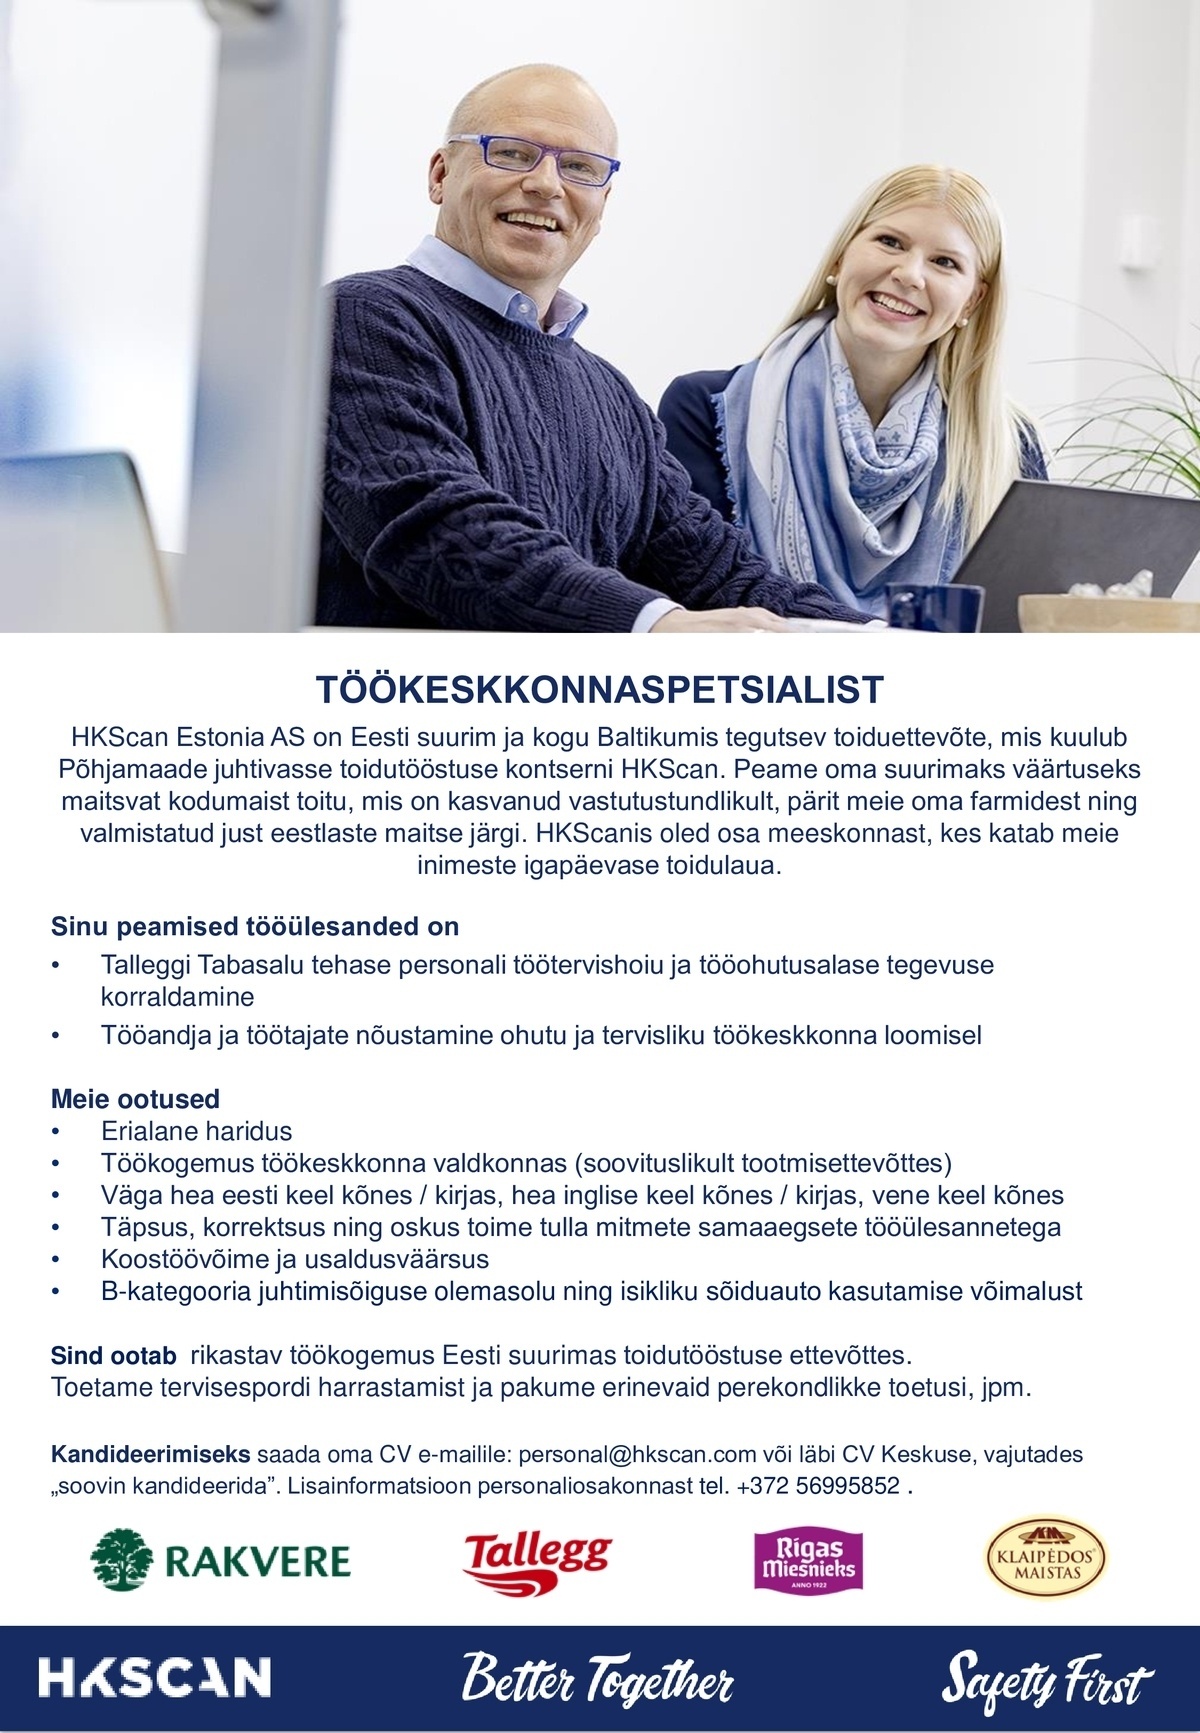 HKScan Estonia AS Töökeskkonnaspetsialist